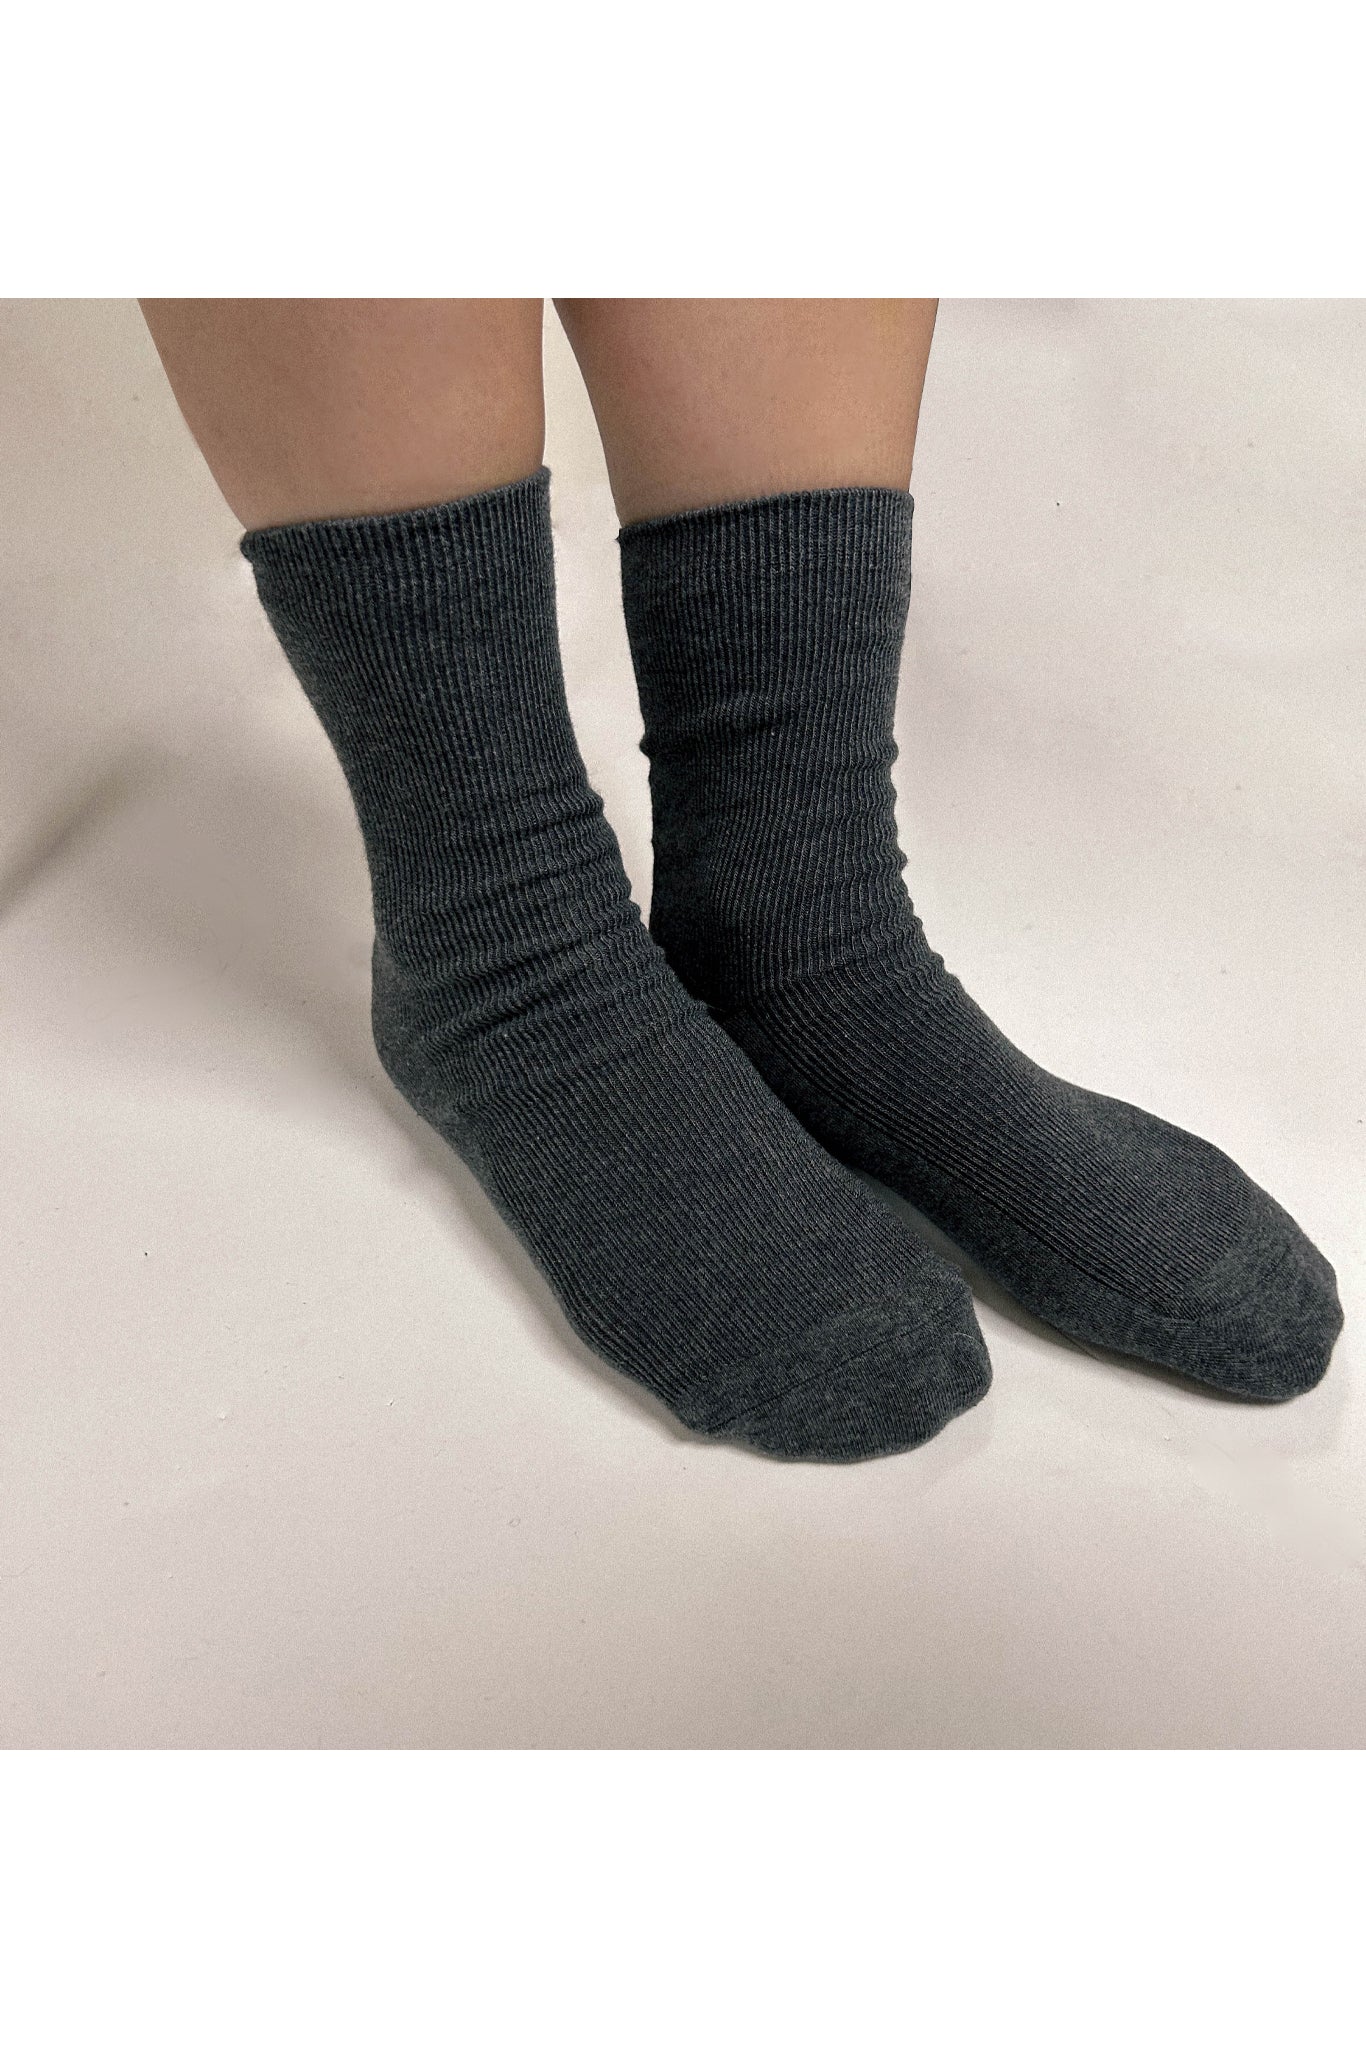 Charcoal woven socks